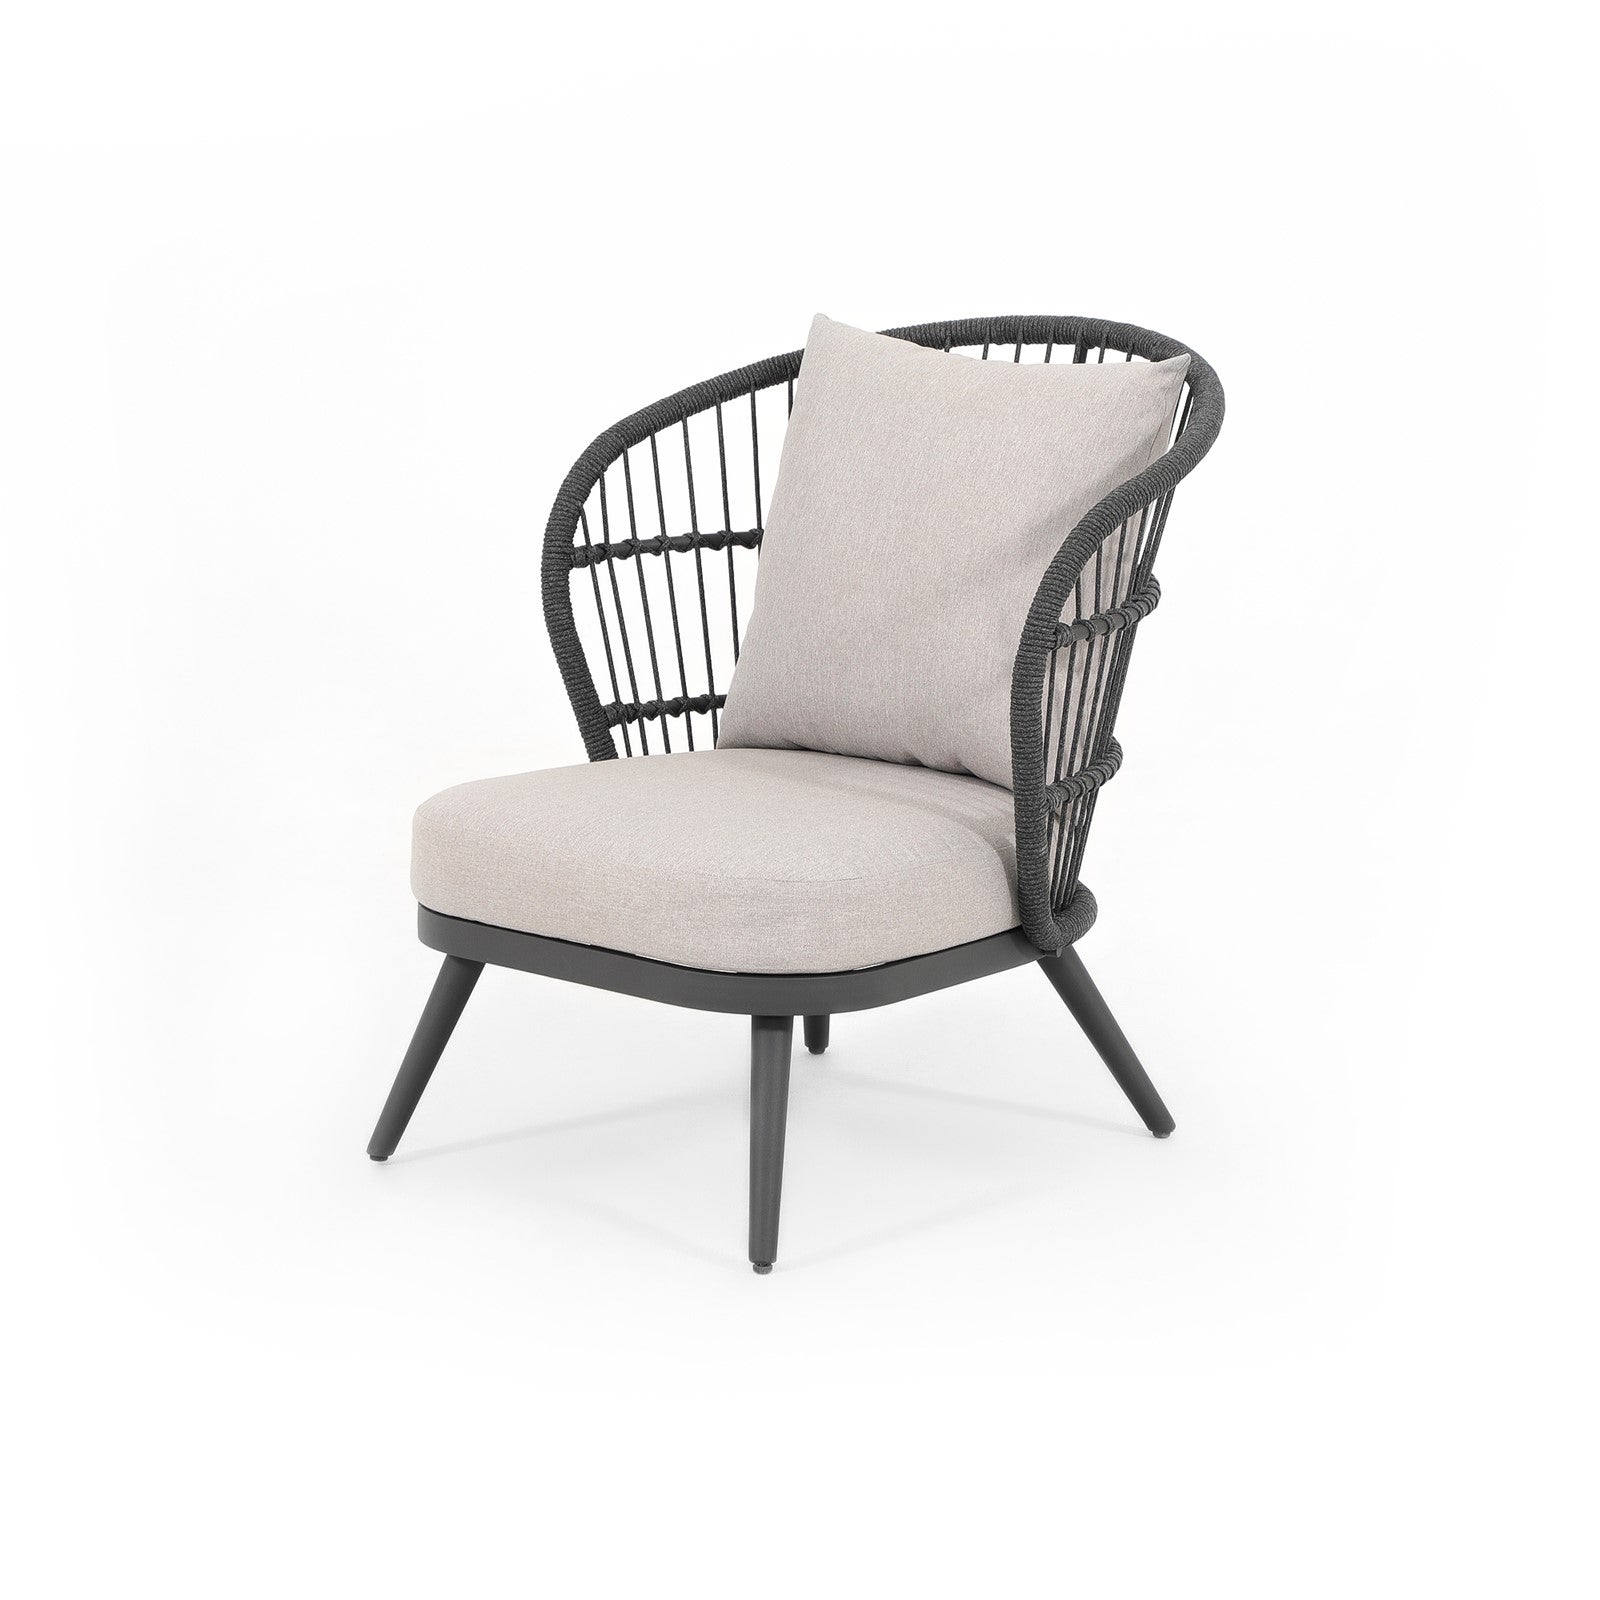 Outdoor Chairs - Jardina European & Modern Outdoor Furniture